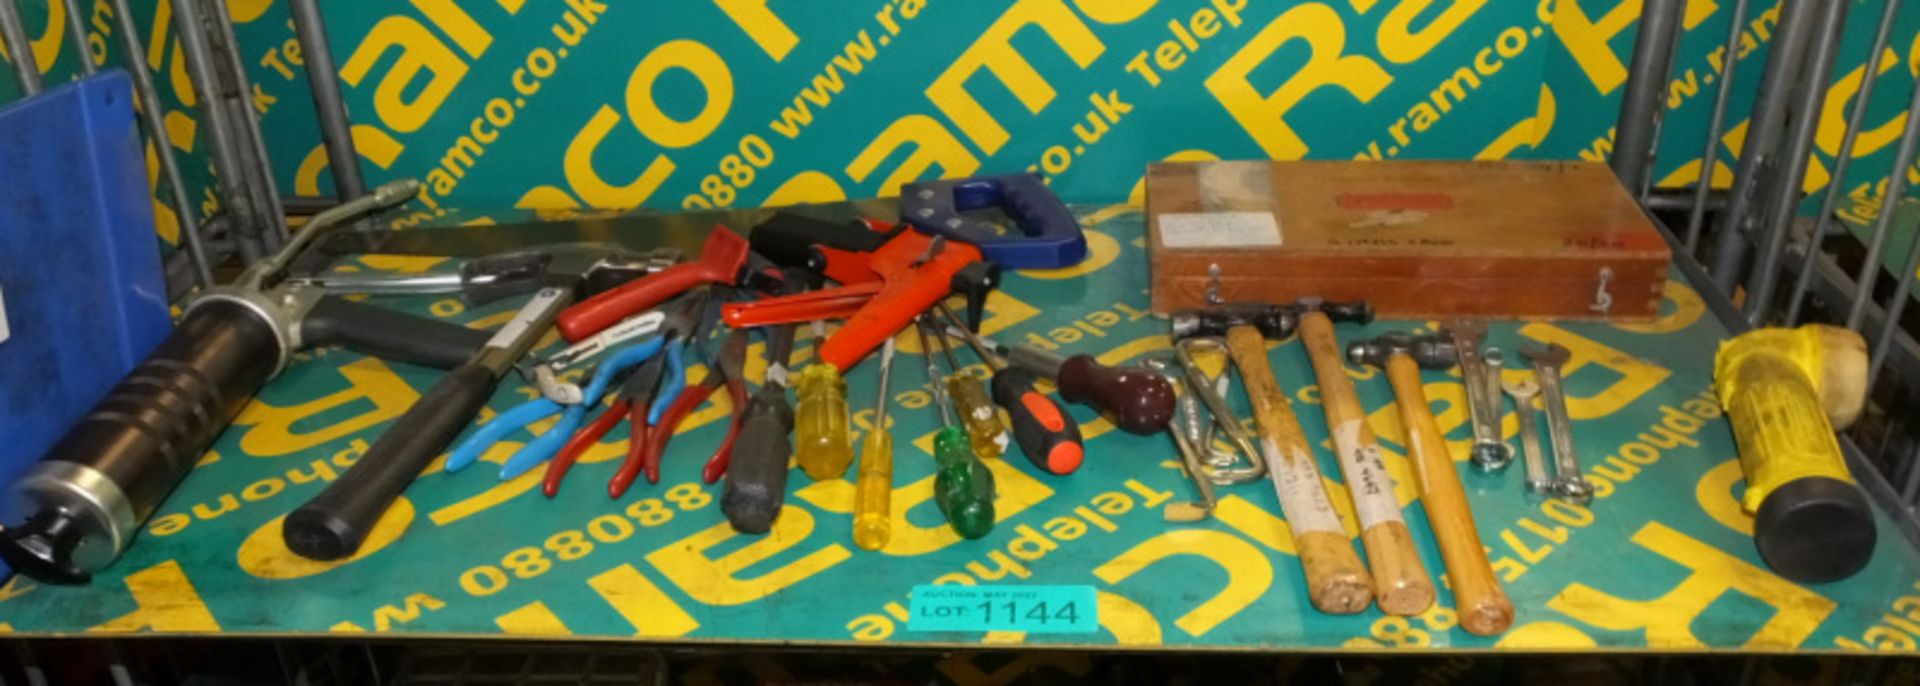 Various hand tools, hammer, screwdrivers, pliers